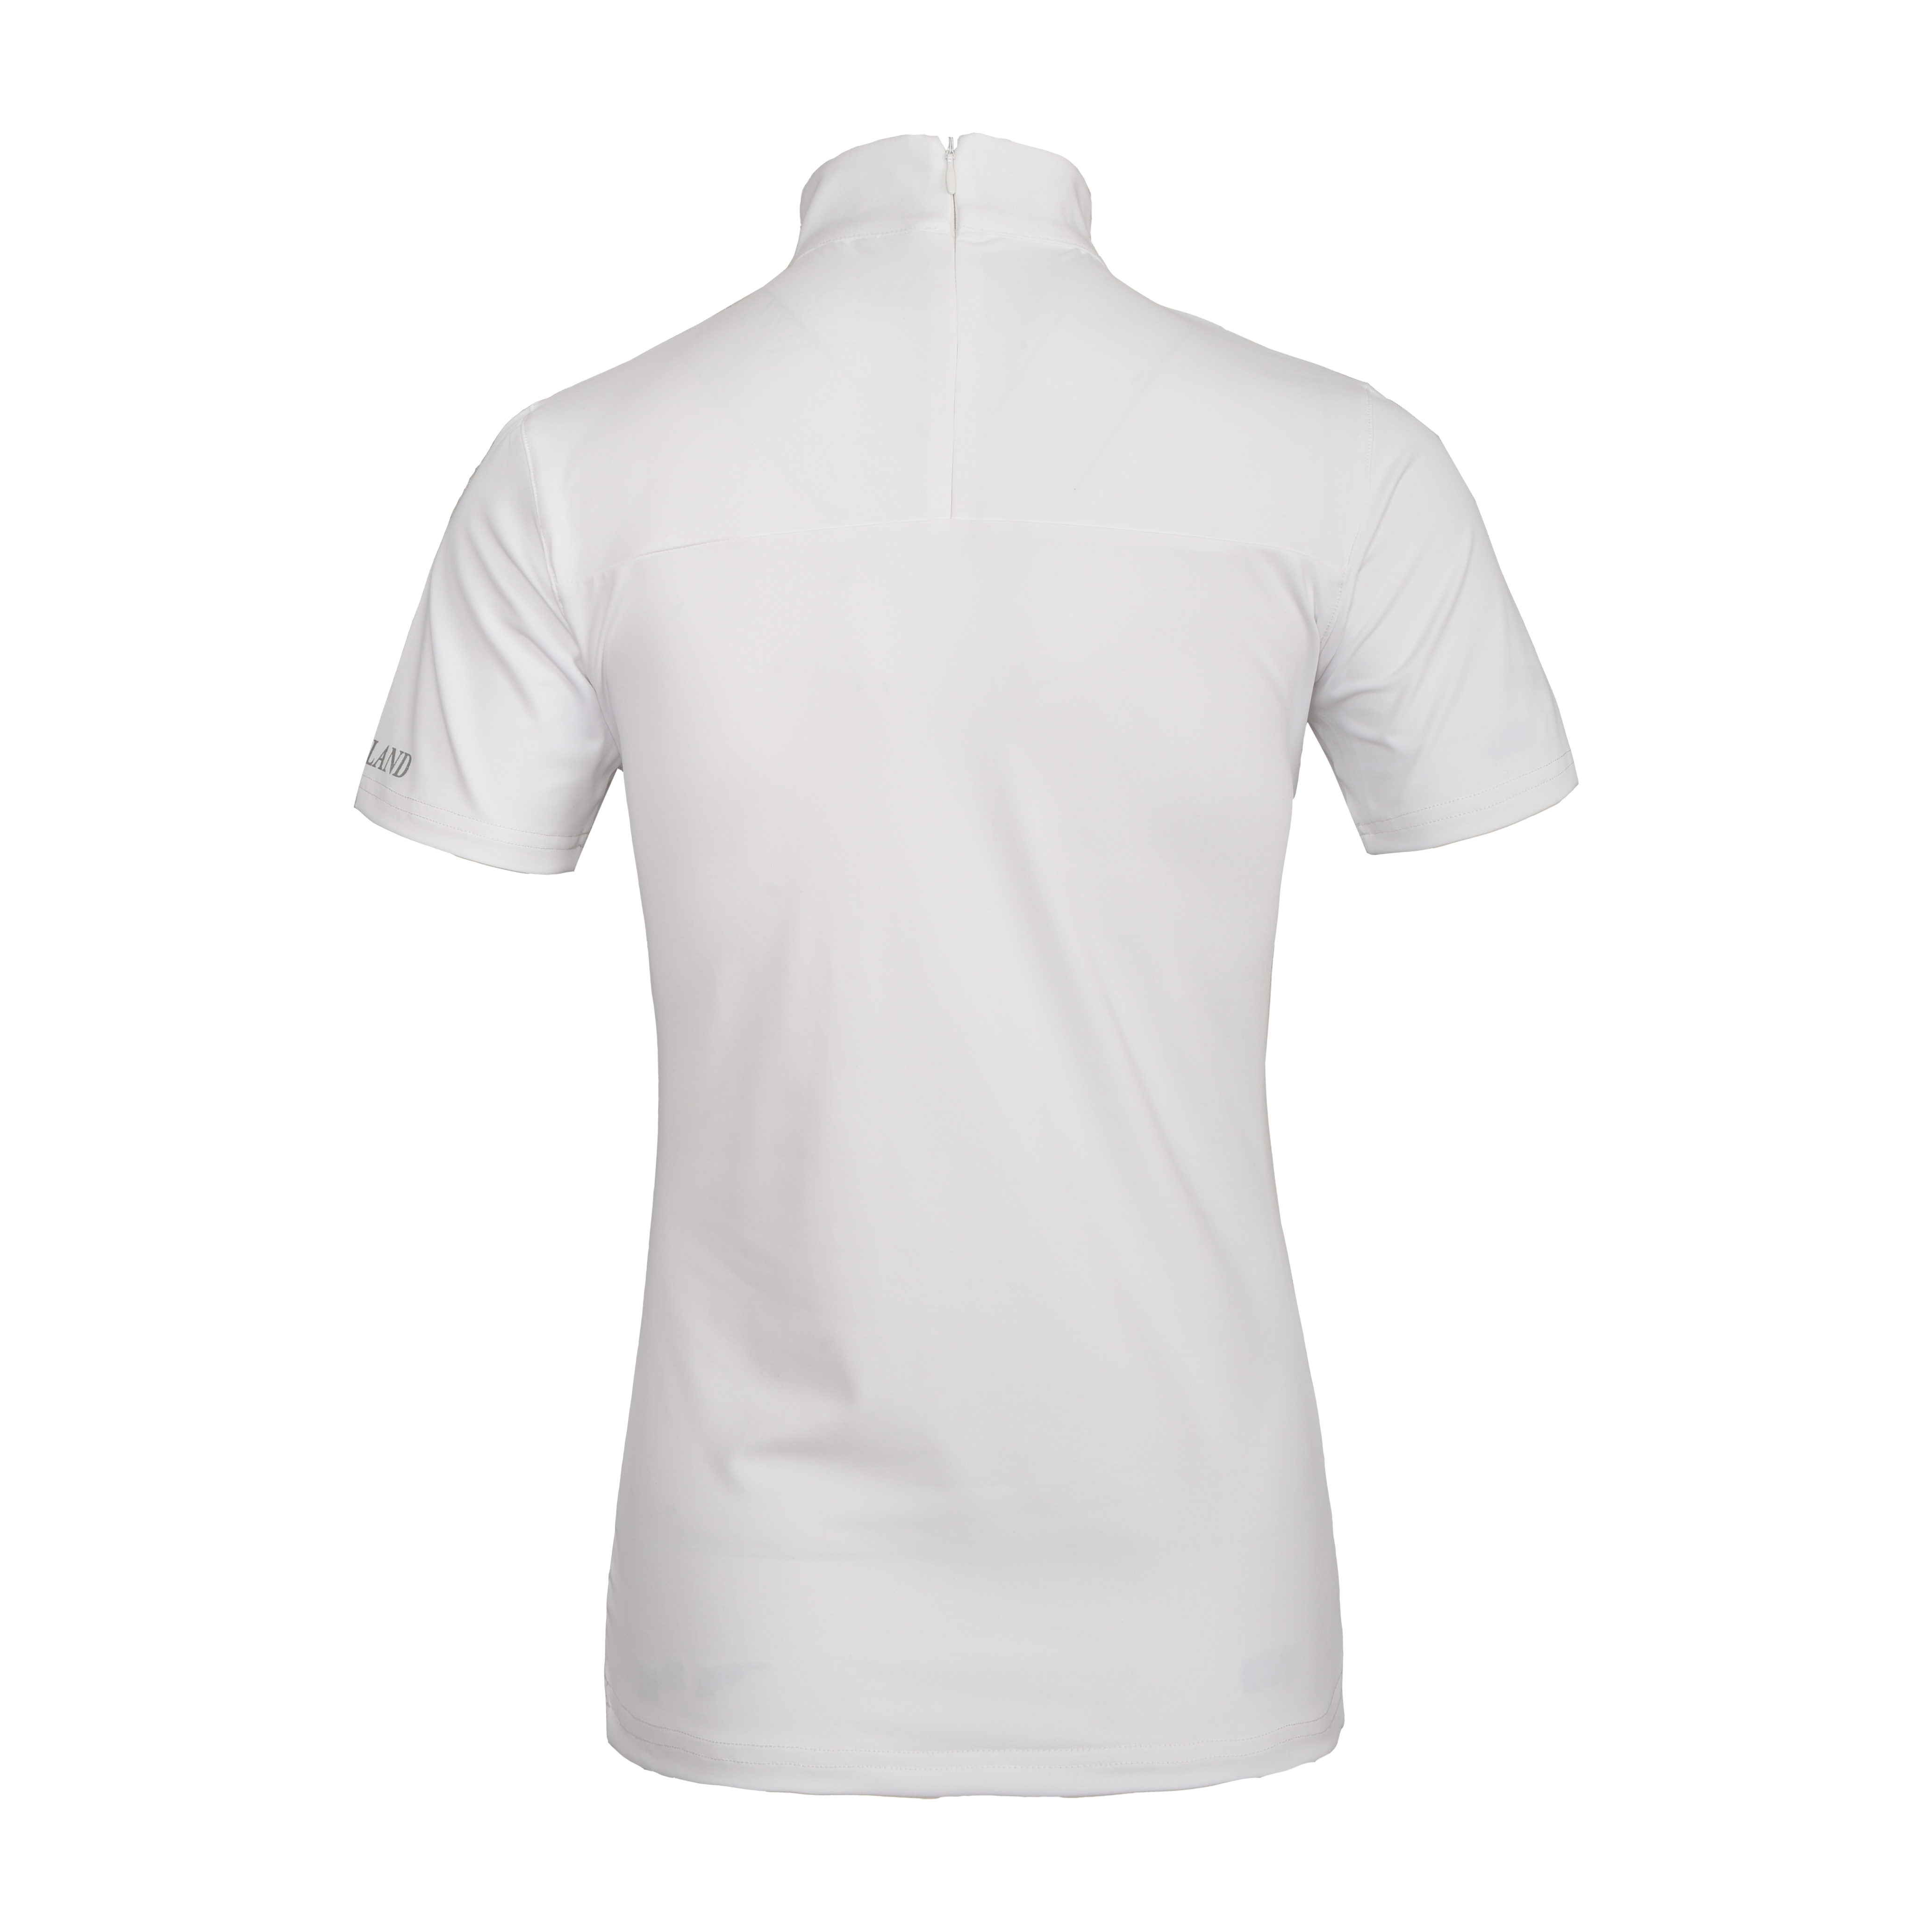 Kingsland KLbridget Damen-Turniershirt, White